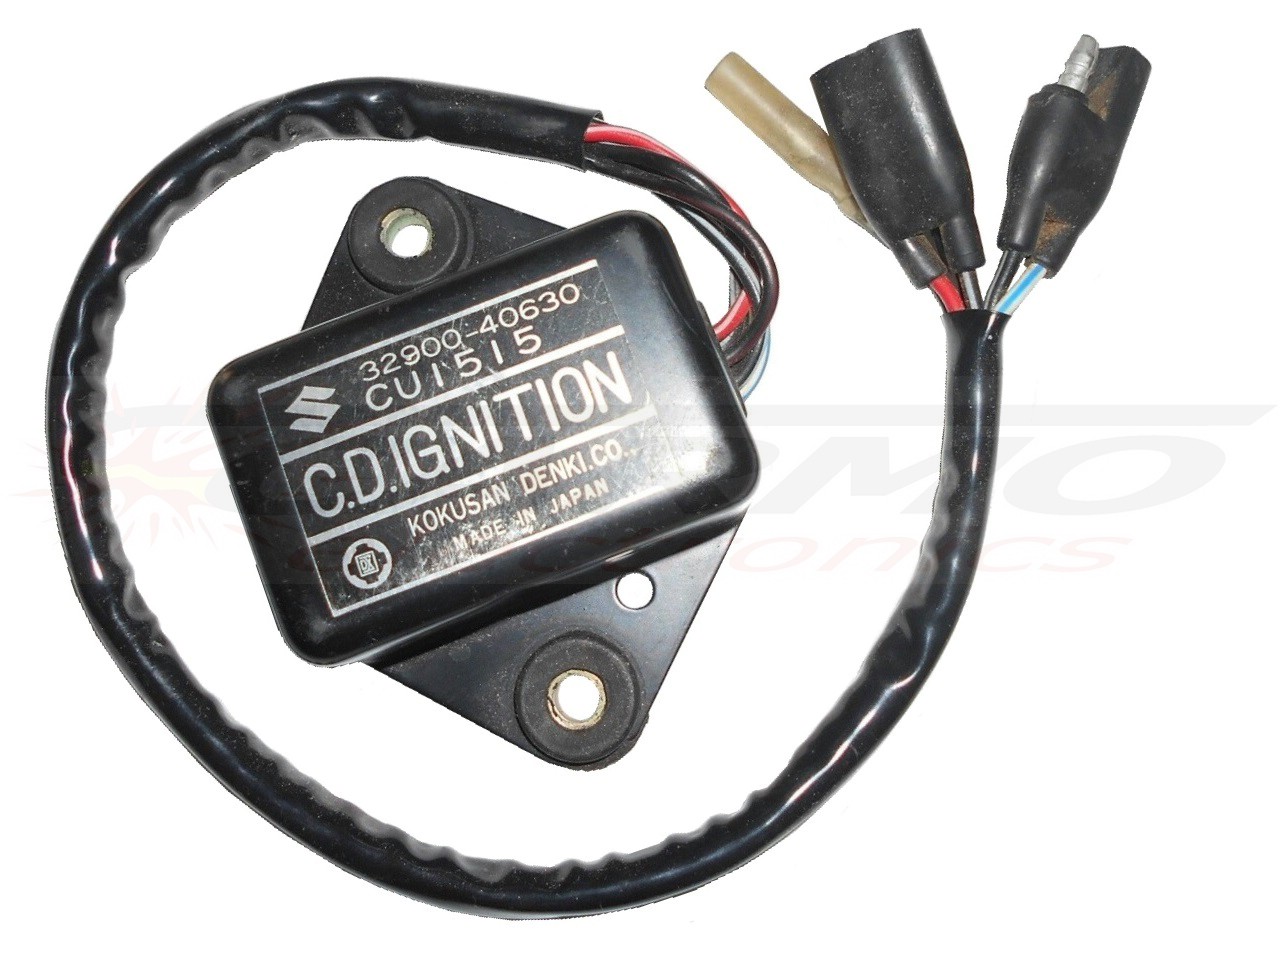 PE250 PE400 igniter ignition module CDI Box (CU1515, 32900-40603, C.D.IGNITION)